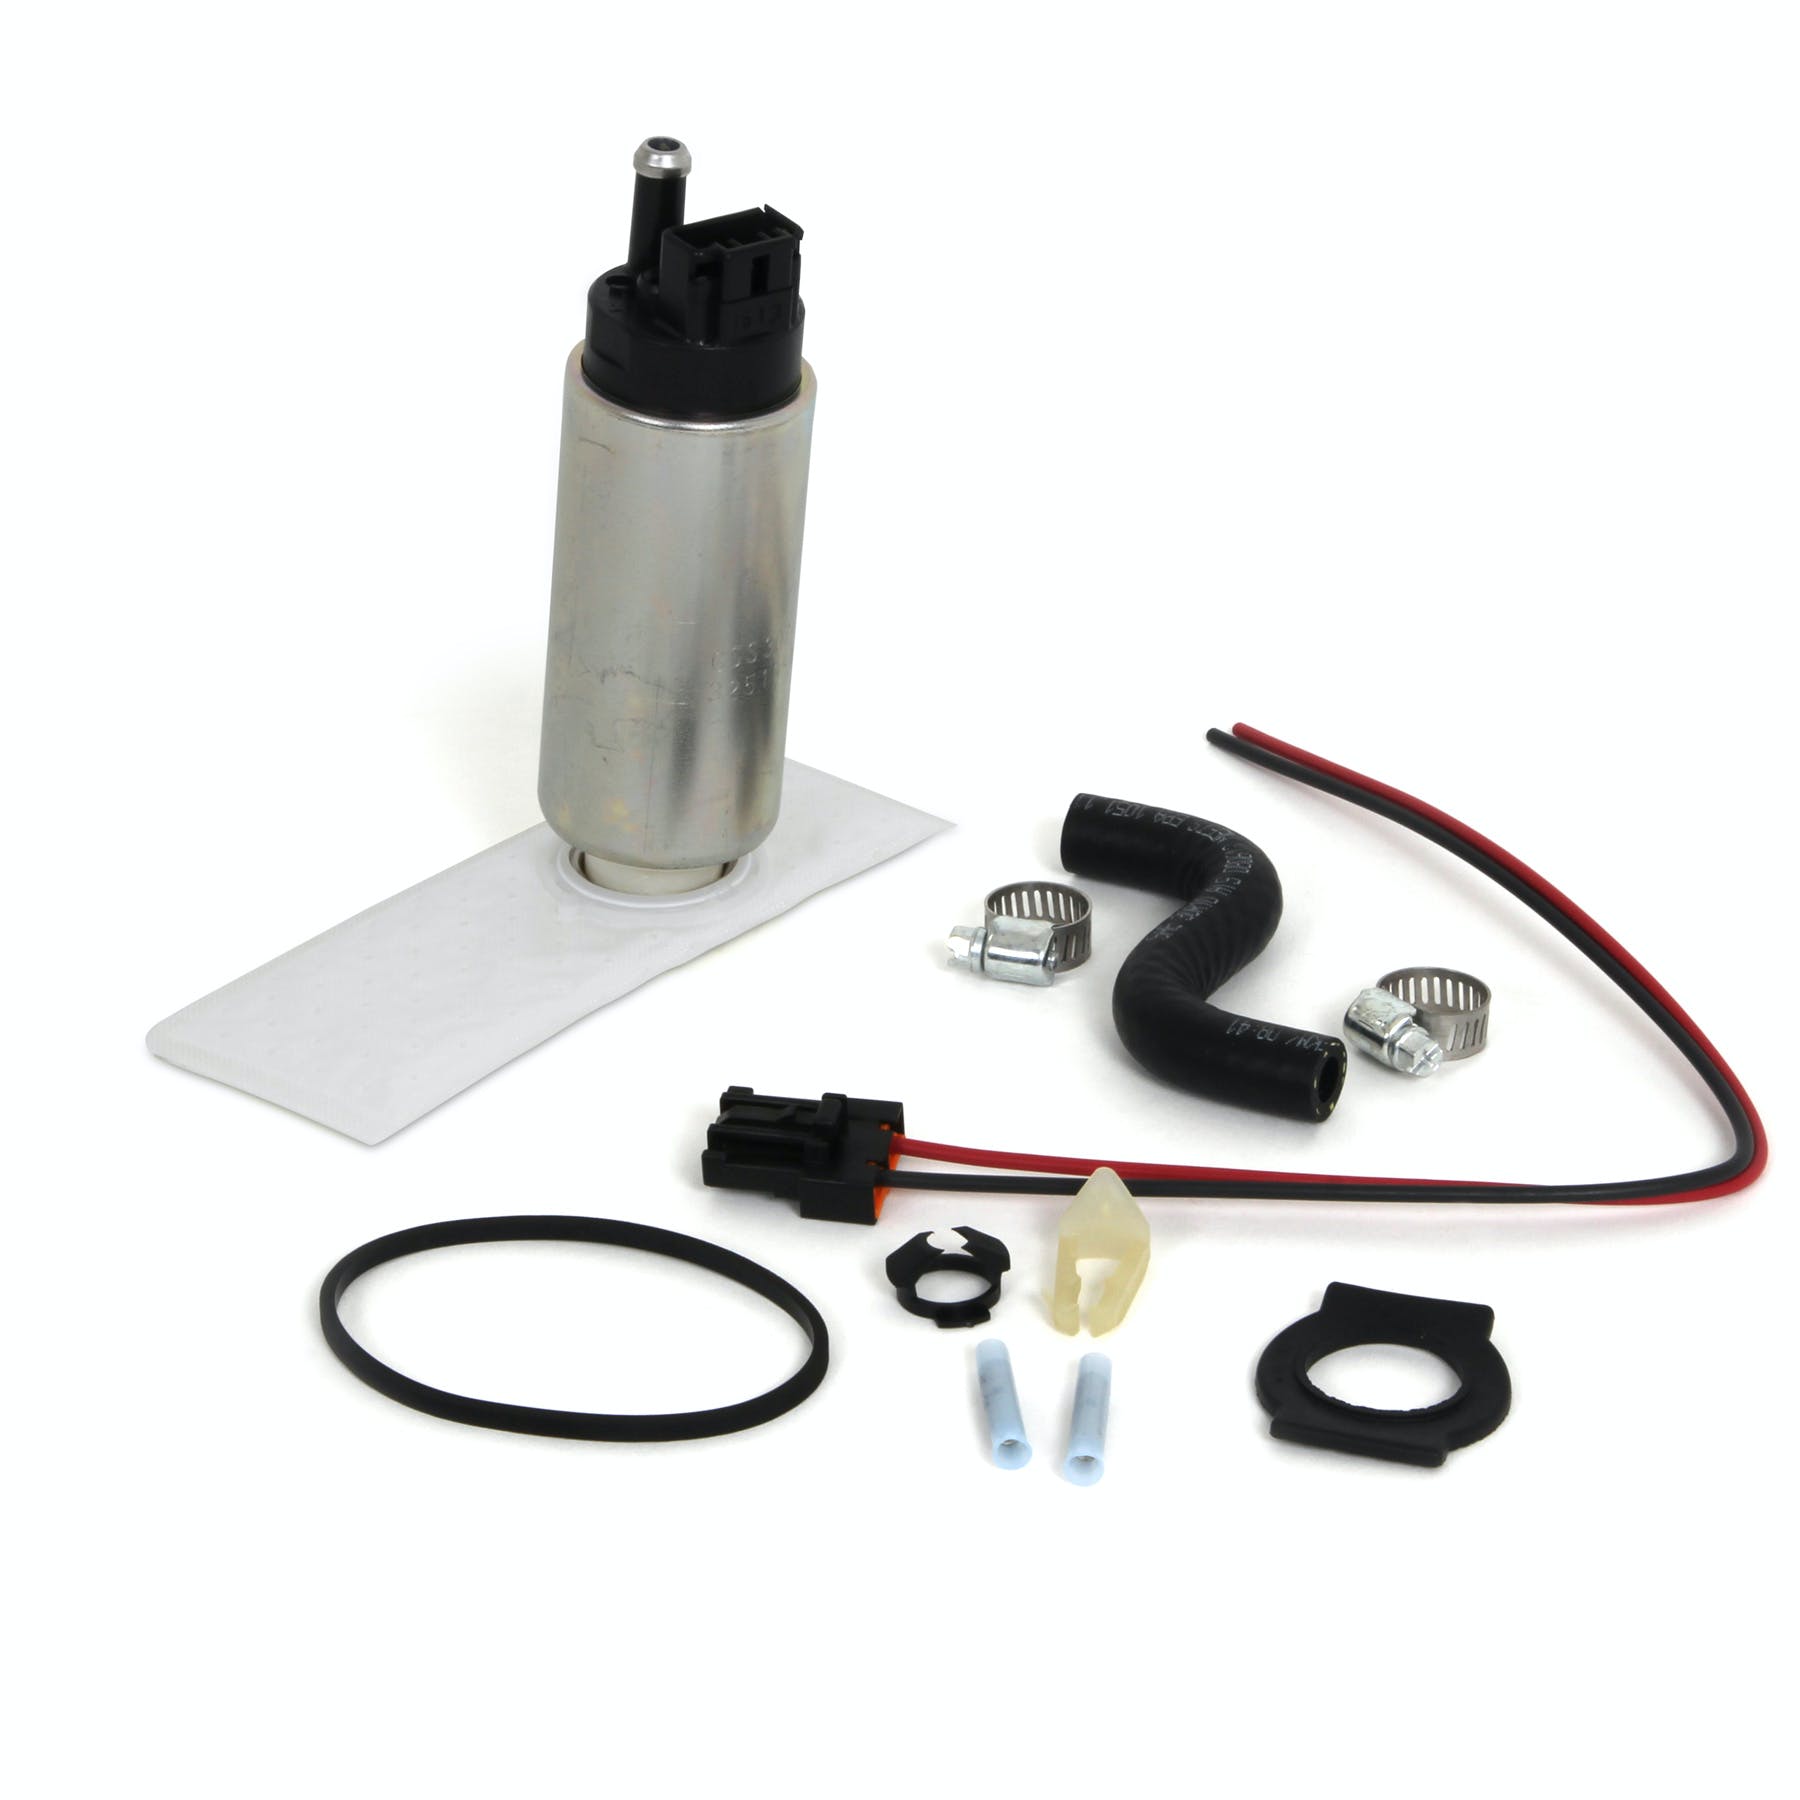 BBK Performance Parts 1622 Direct Fit OEM Style High-Volume Electric Fuel Pump Kit